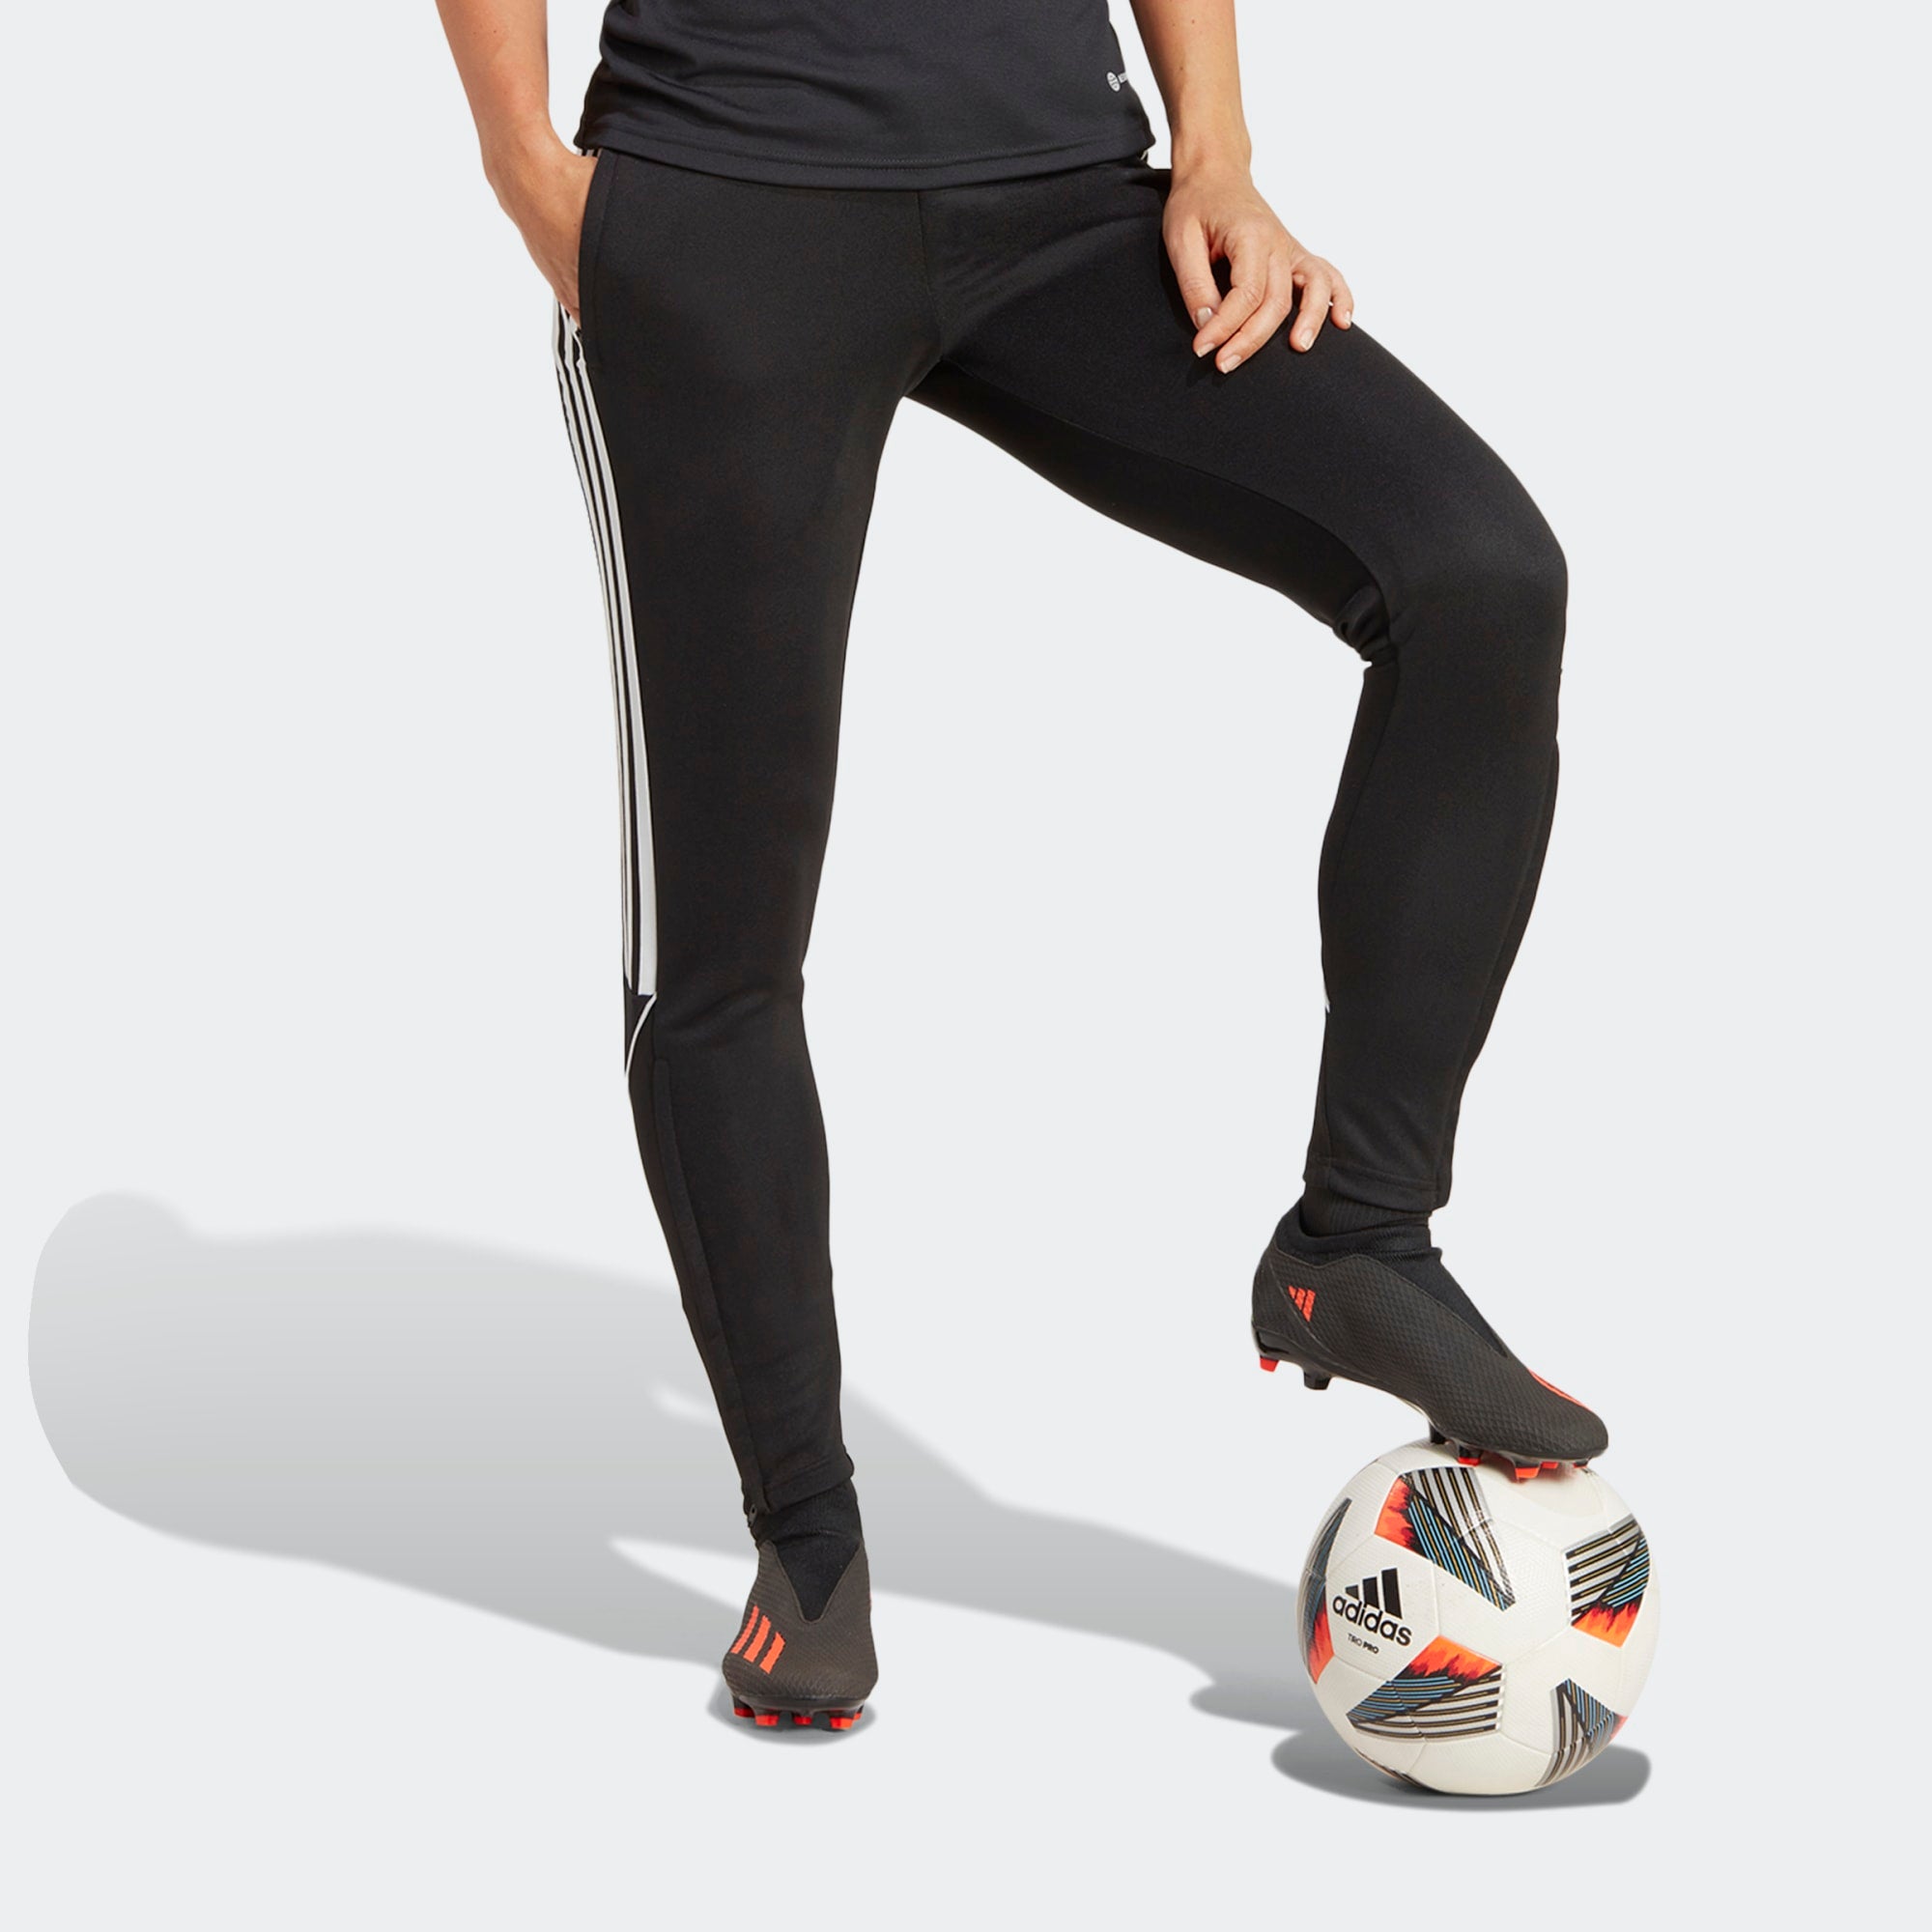 Adidas Women's Black Leggings High-Waisted Size Medium Activewear Pants